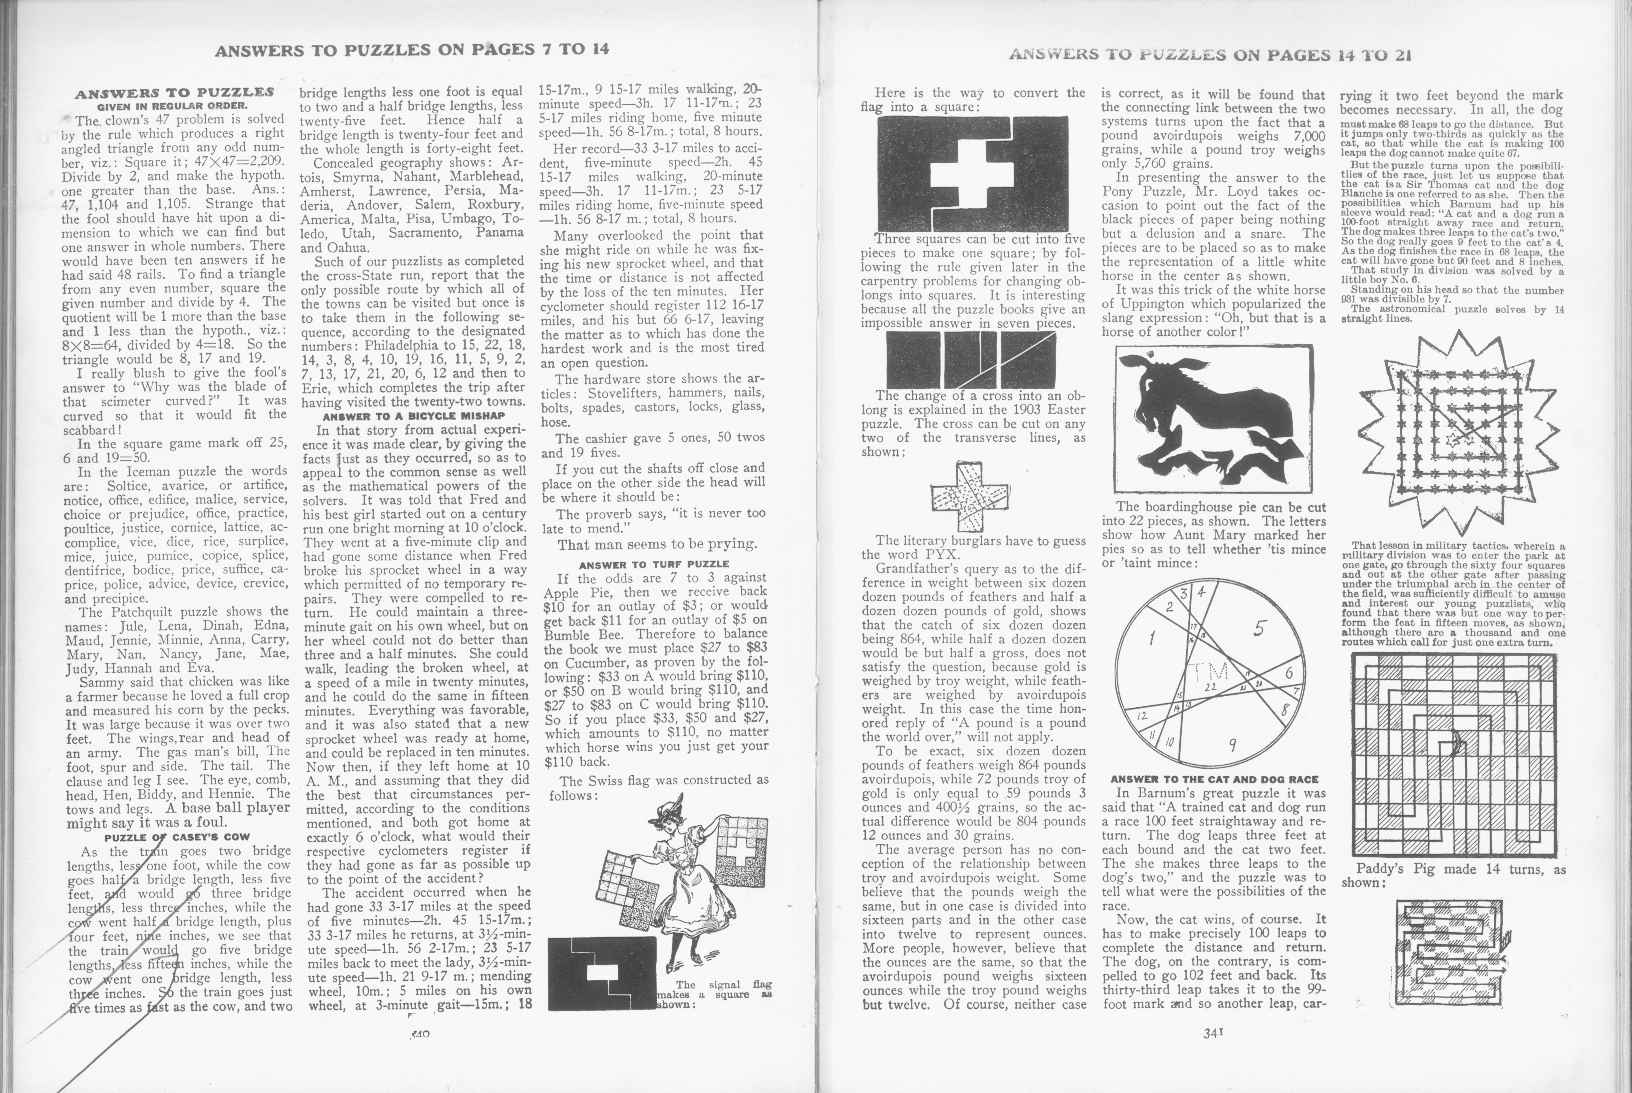 Sam Loyd - Cyclopedia of Puzzles - page 340-341